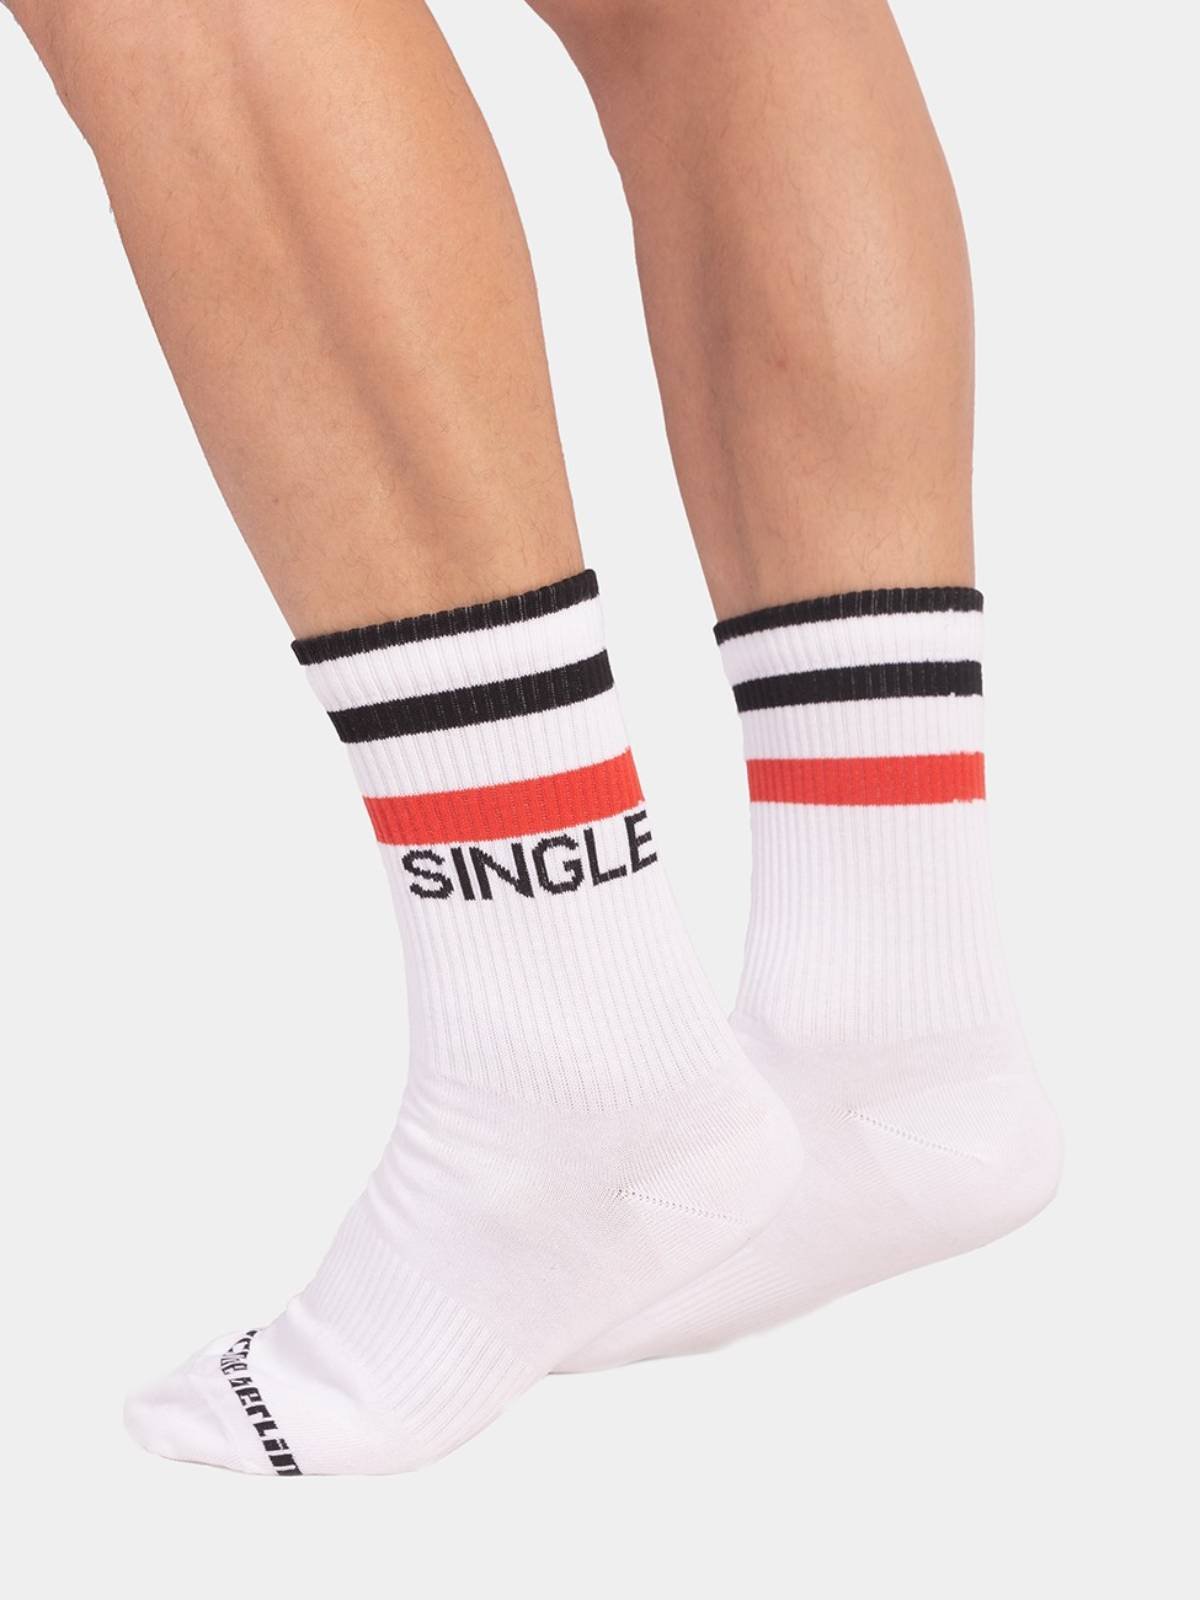 Urban Socks Single